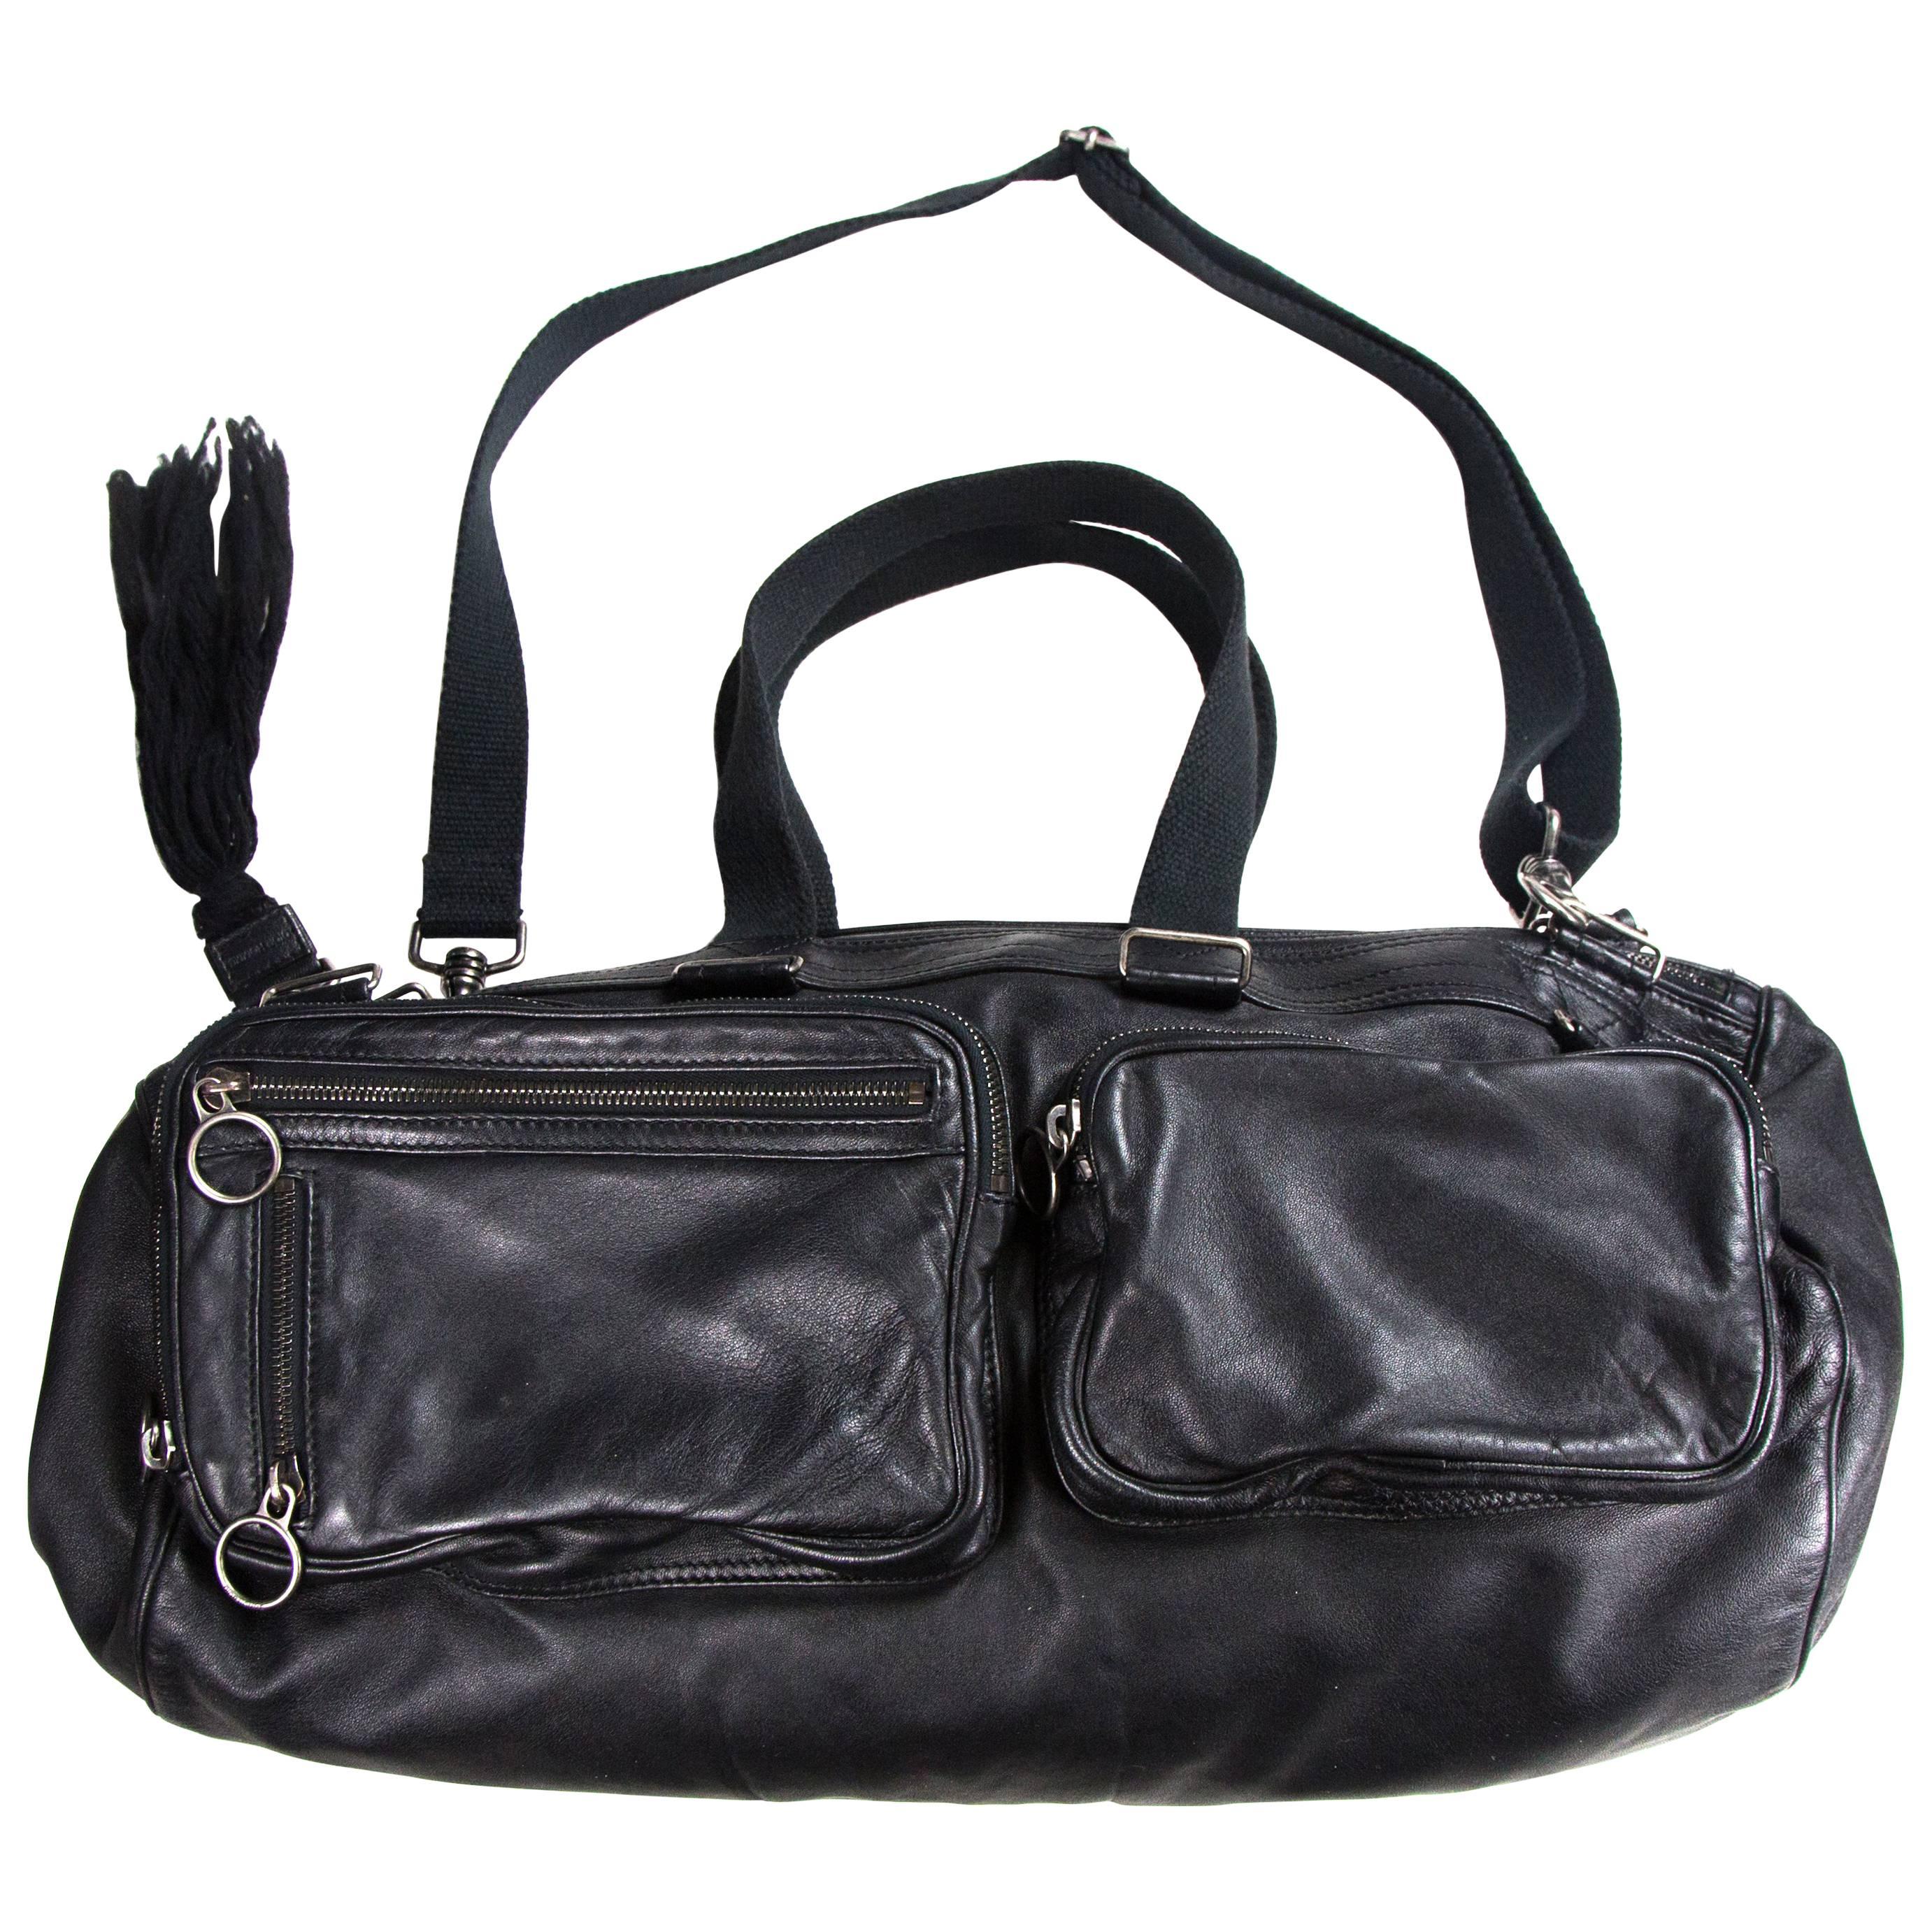 Dior Homme Duffle Leather Bag - Black Tassel Weekend Travel Gym Delville Hedi